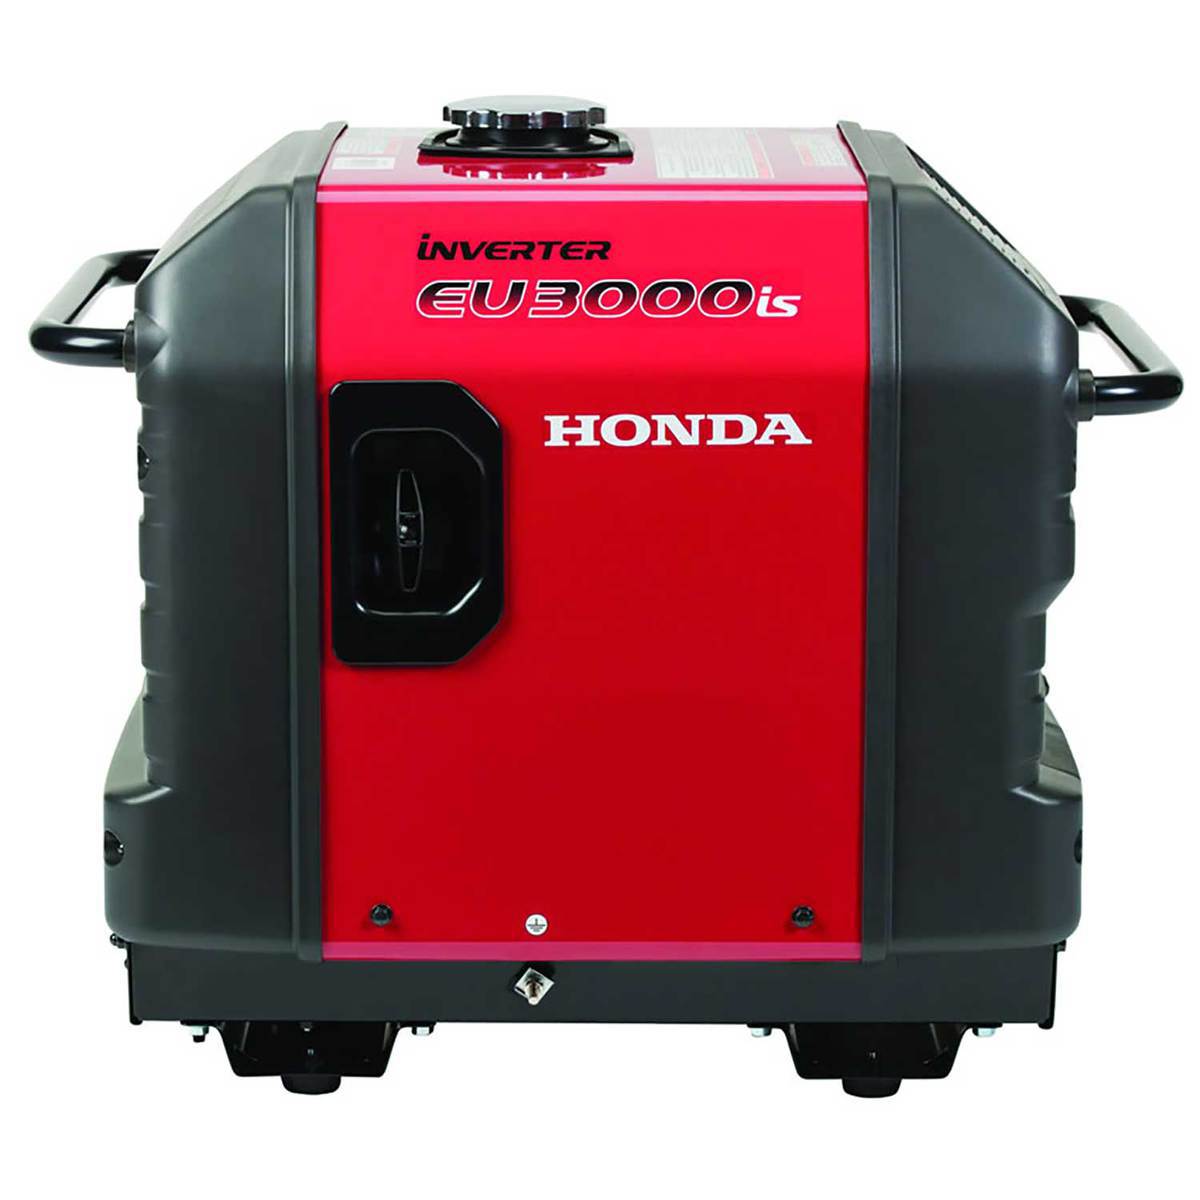 Honda Eu3000is 30002800 Watts Inverter Generator 49 State Sportsmans Warehouse